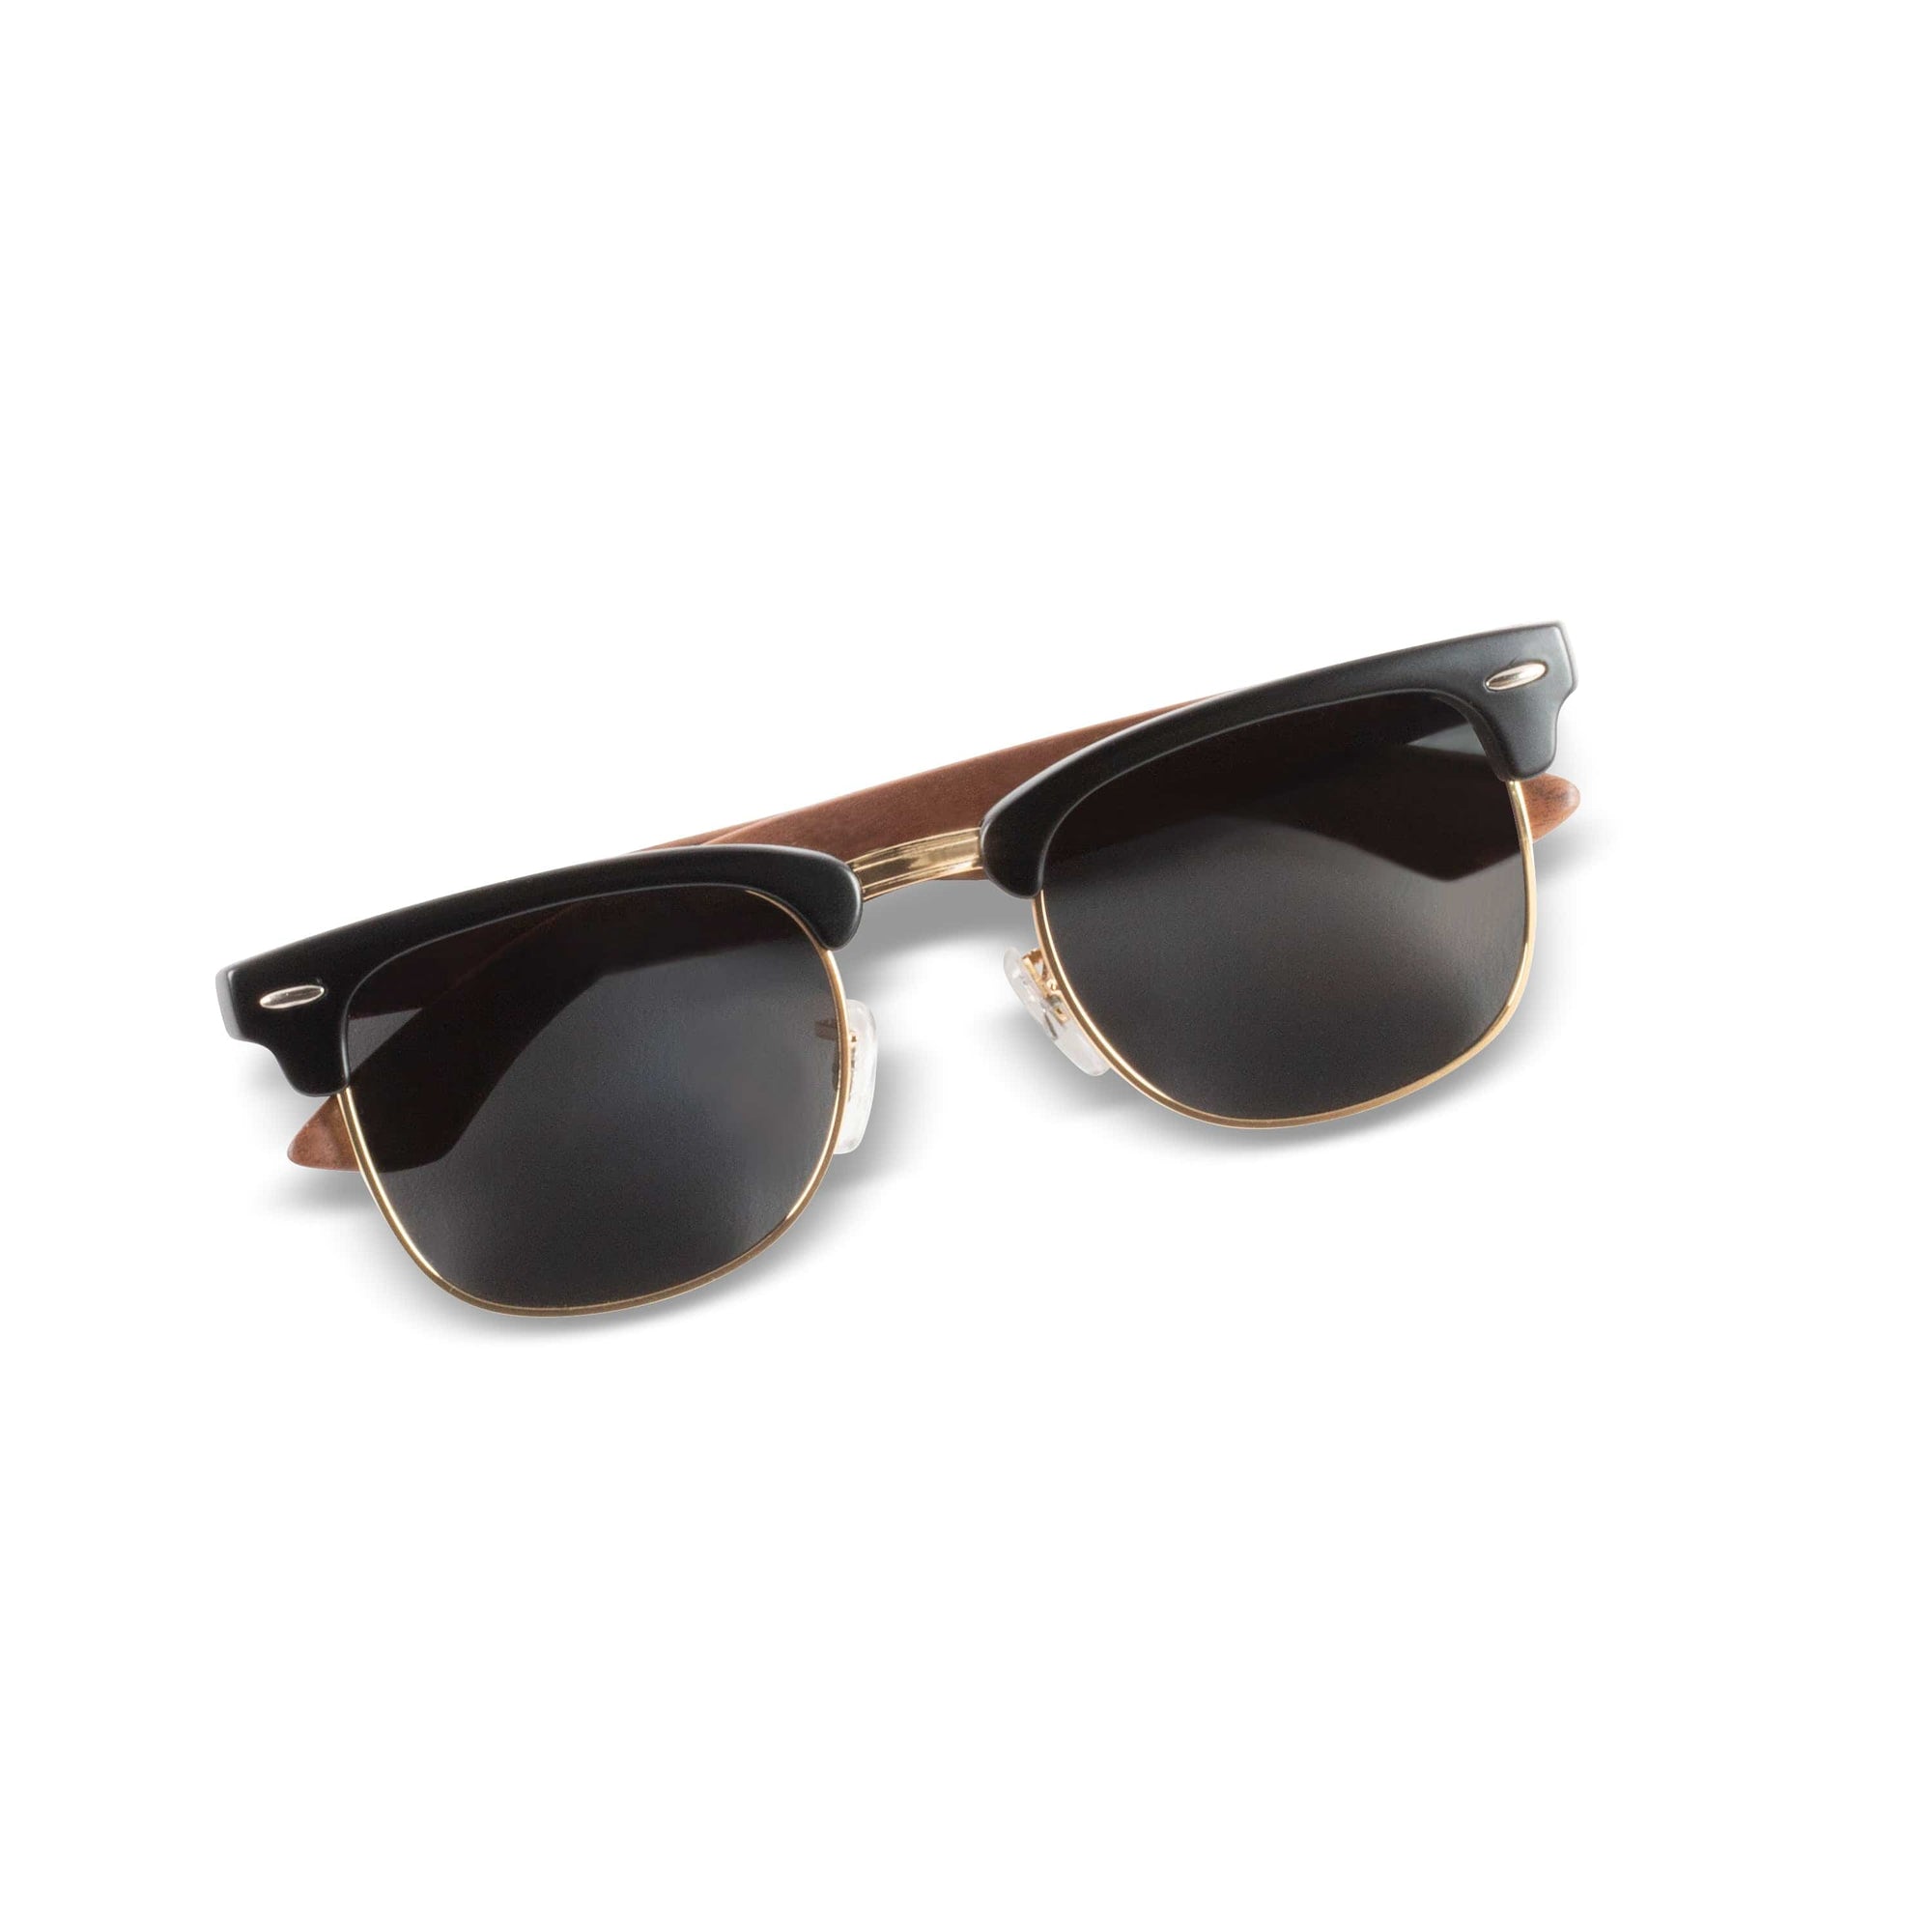 Joycoast Wooden Sunglasses “Kennedy” | Walnut